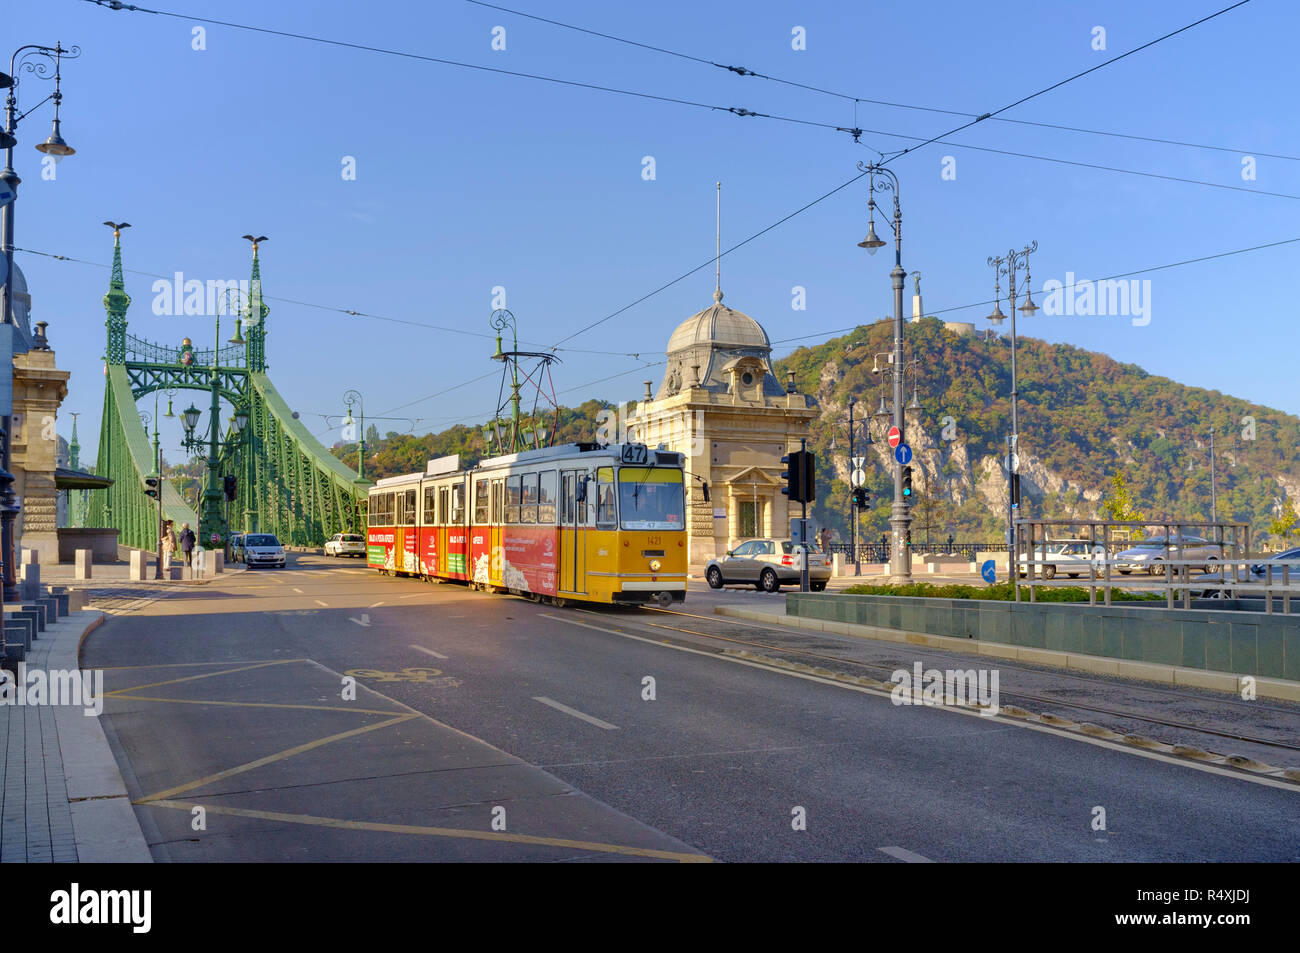 Tram crossing Szabadság híd - Independance or Liberty Bridge in Budapest Stock Photo